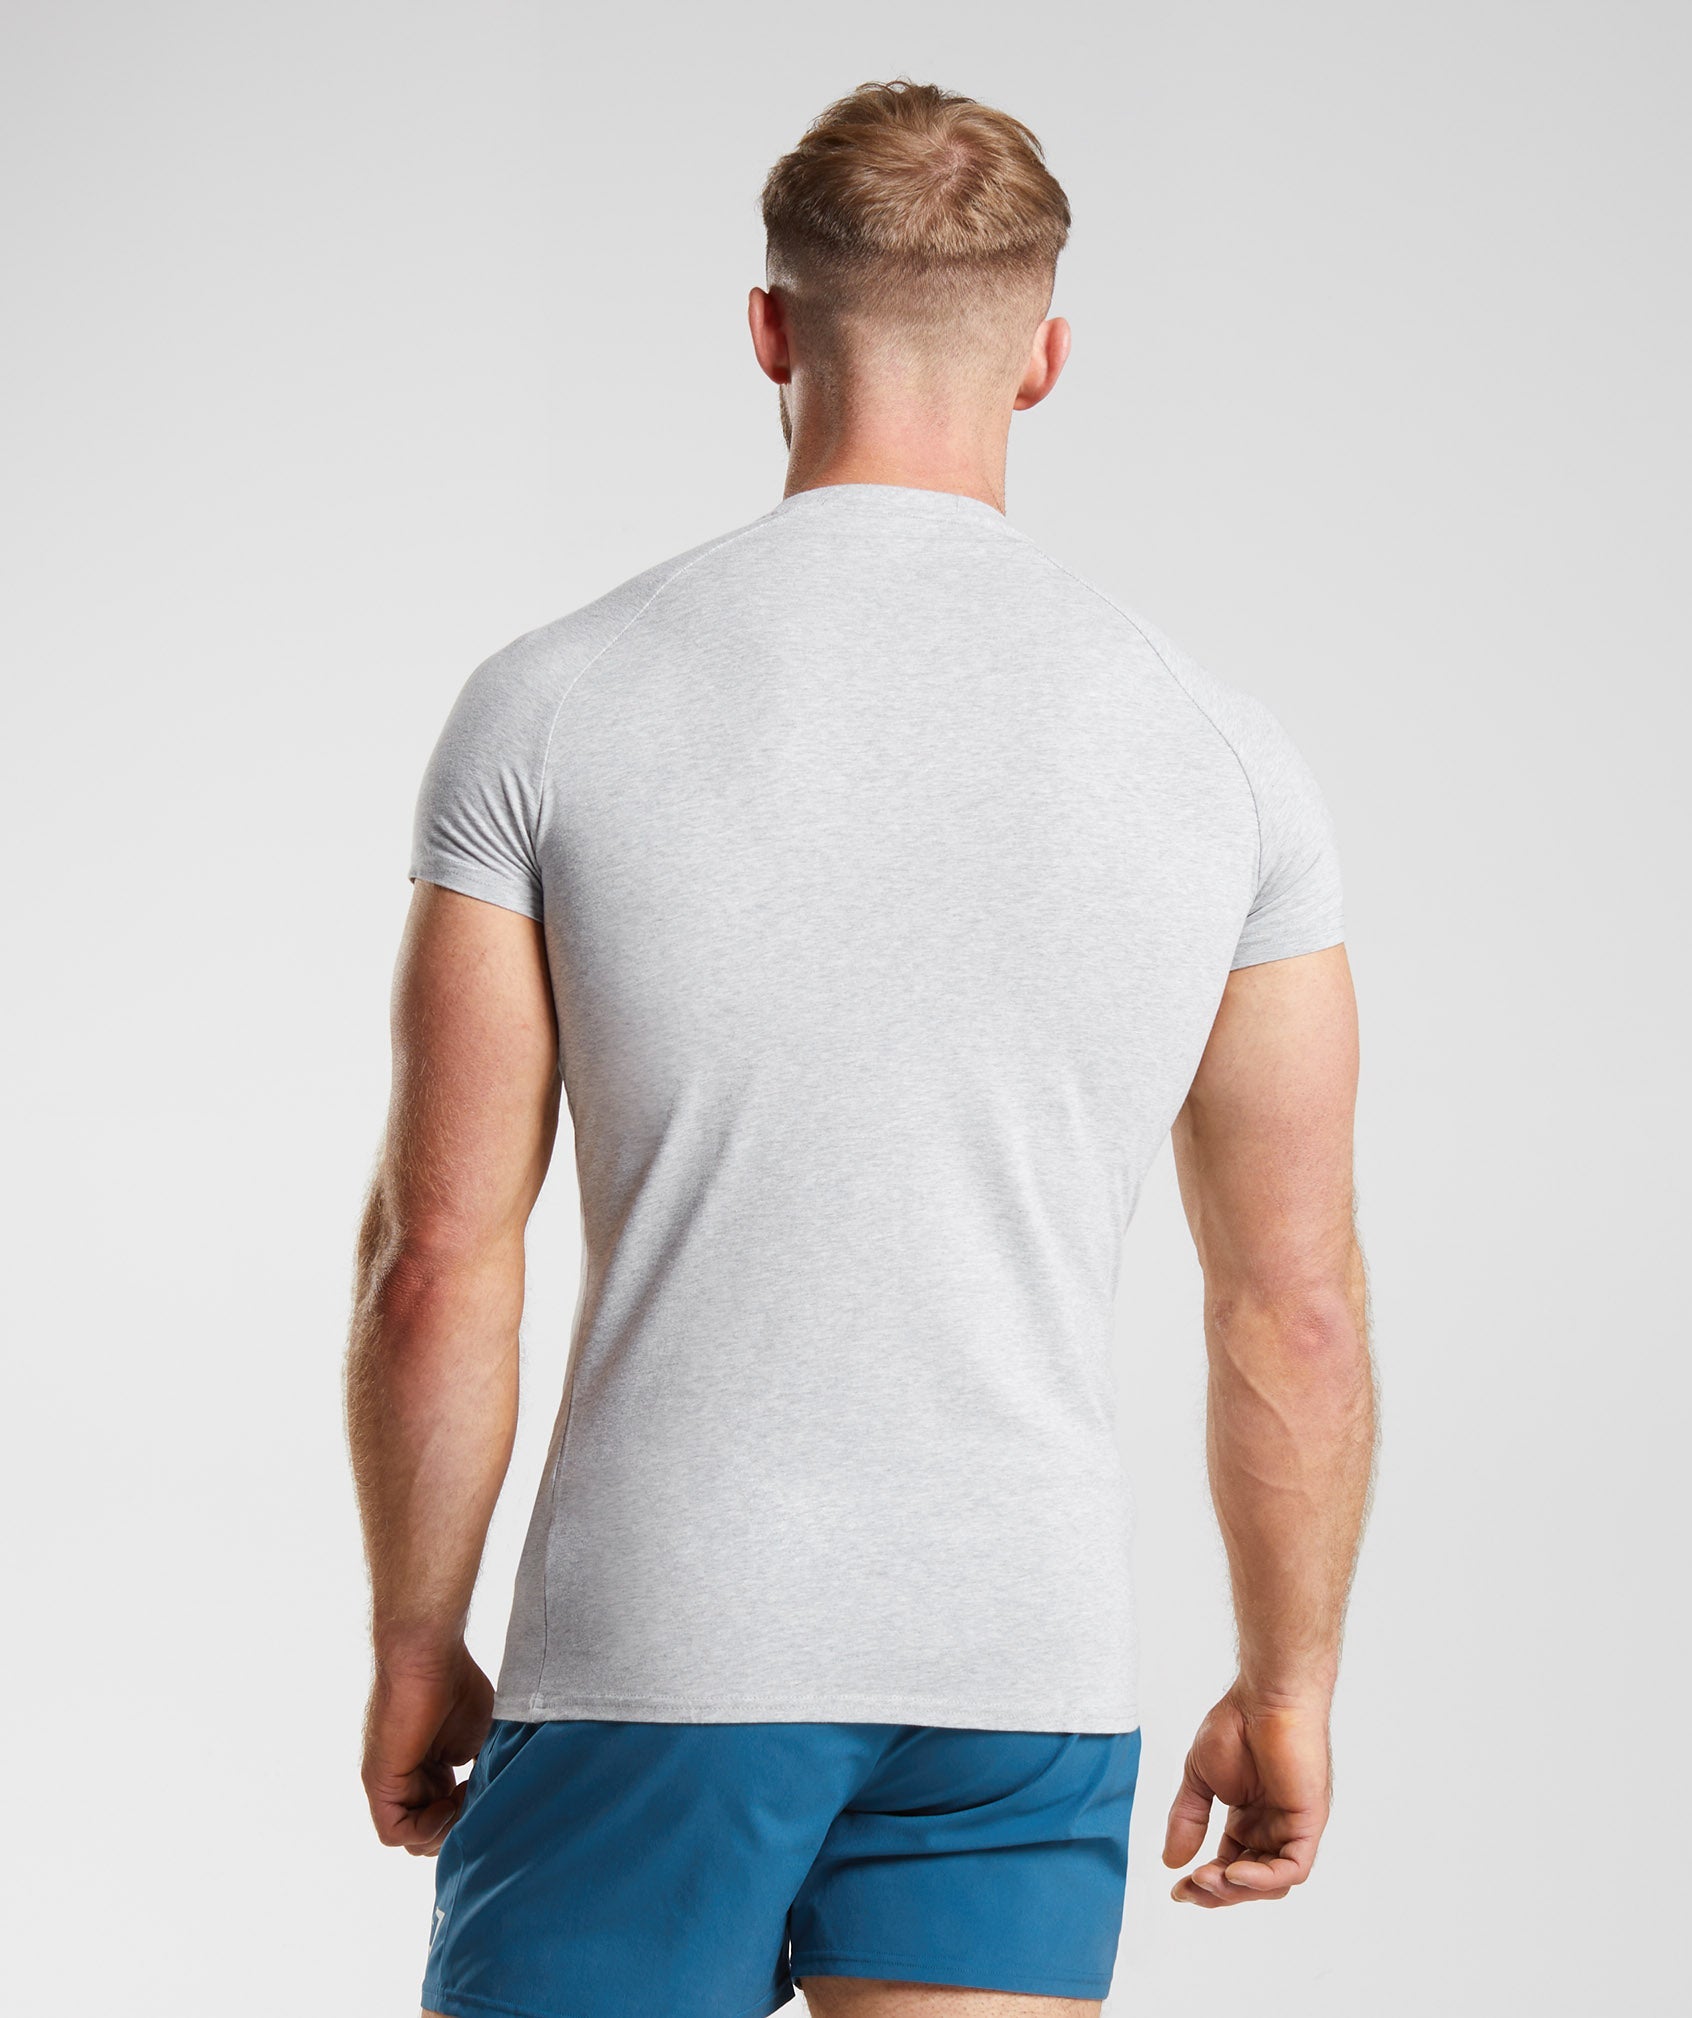 Apollo T-Shirt in Light Grey Marl